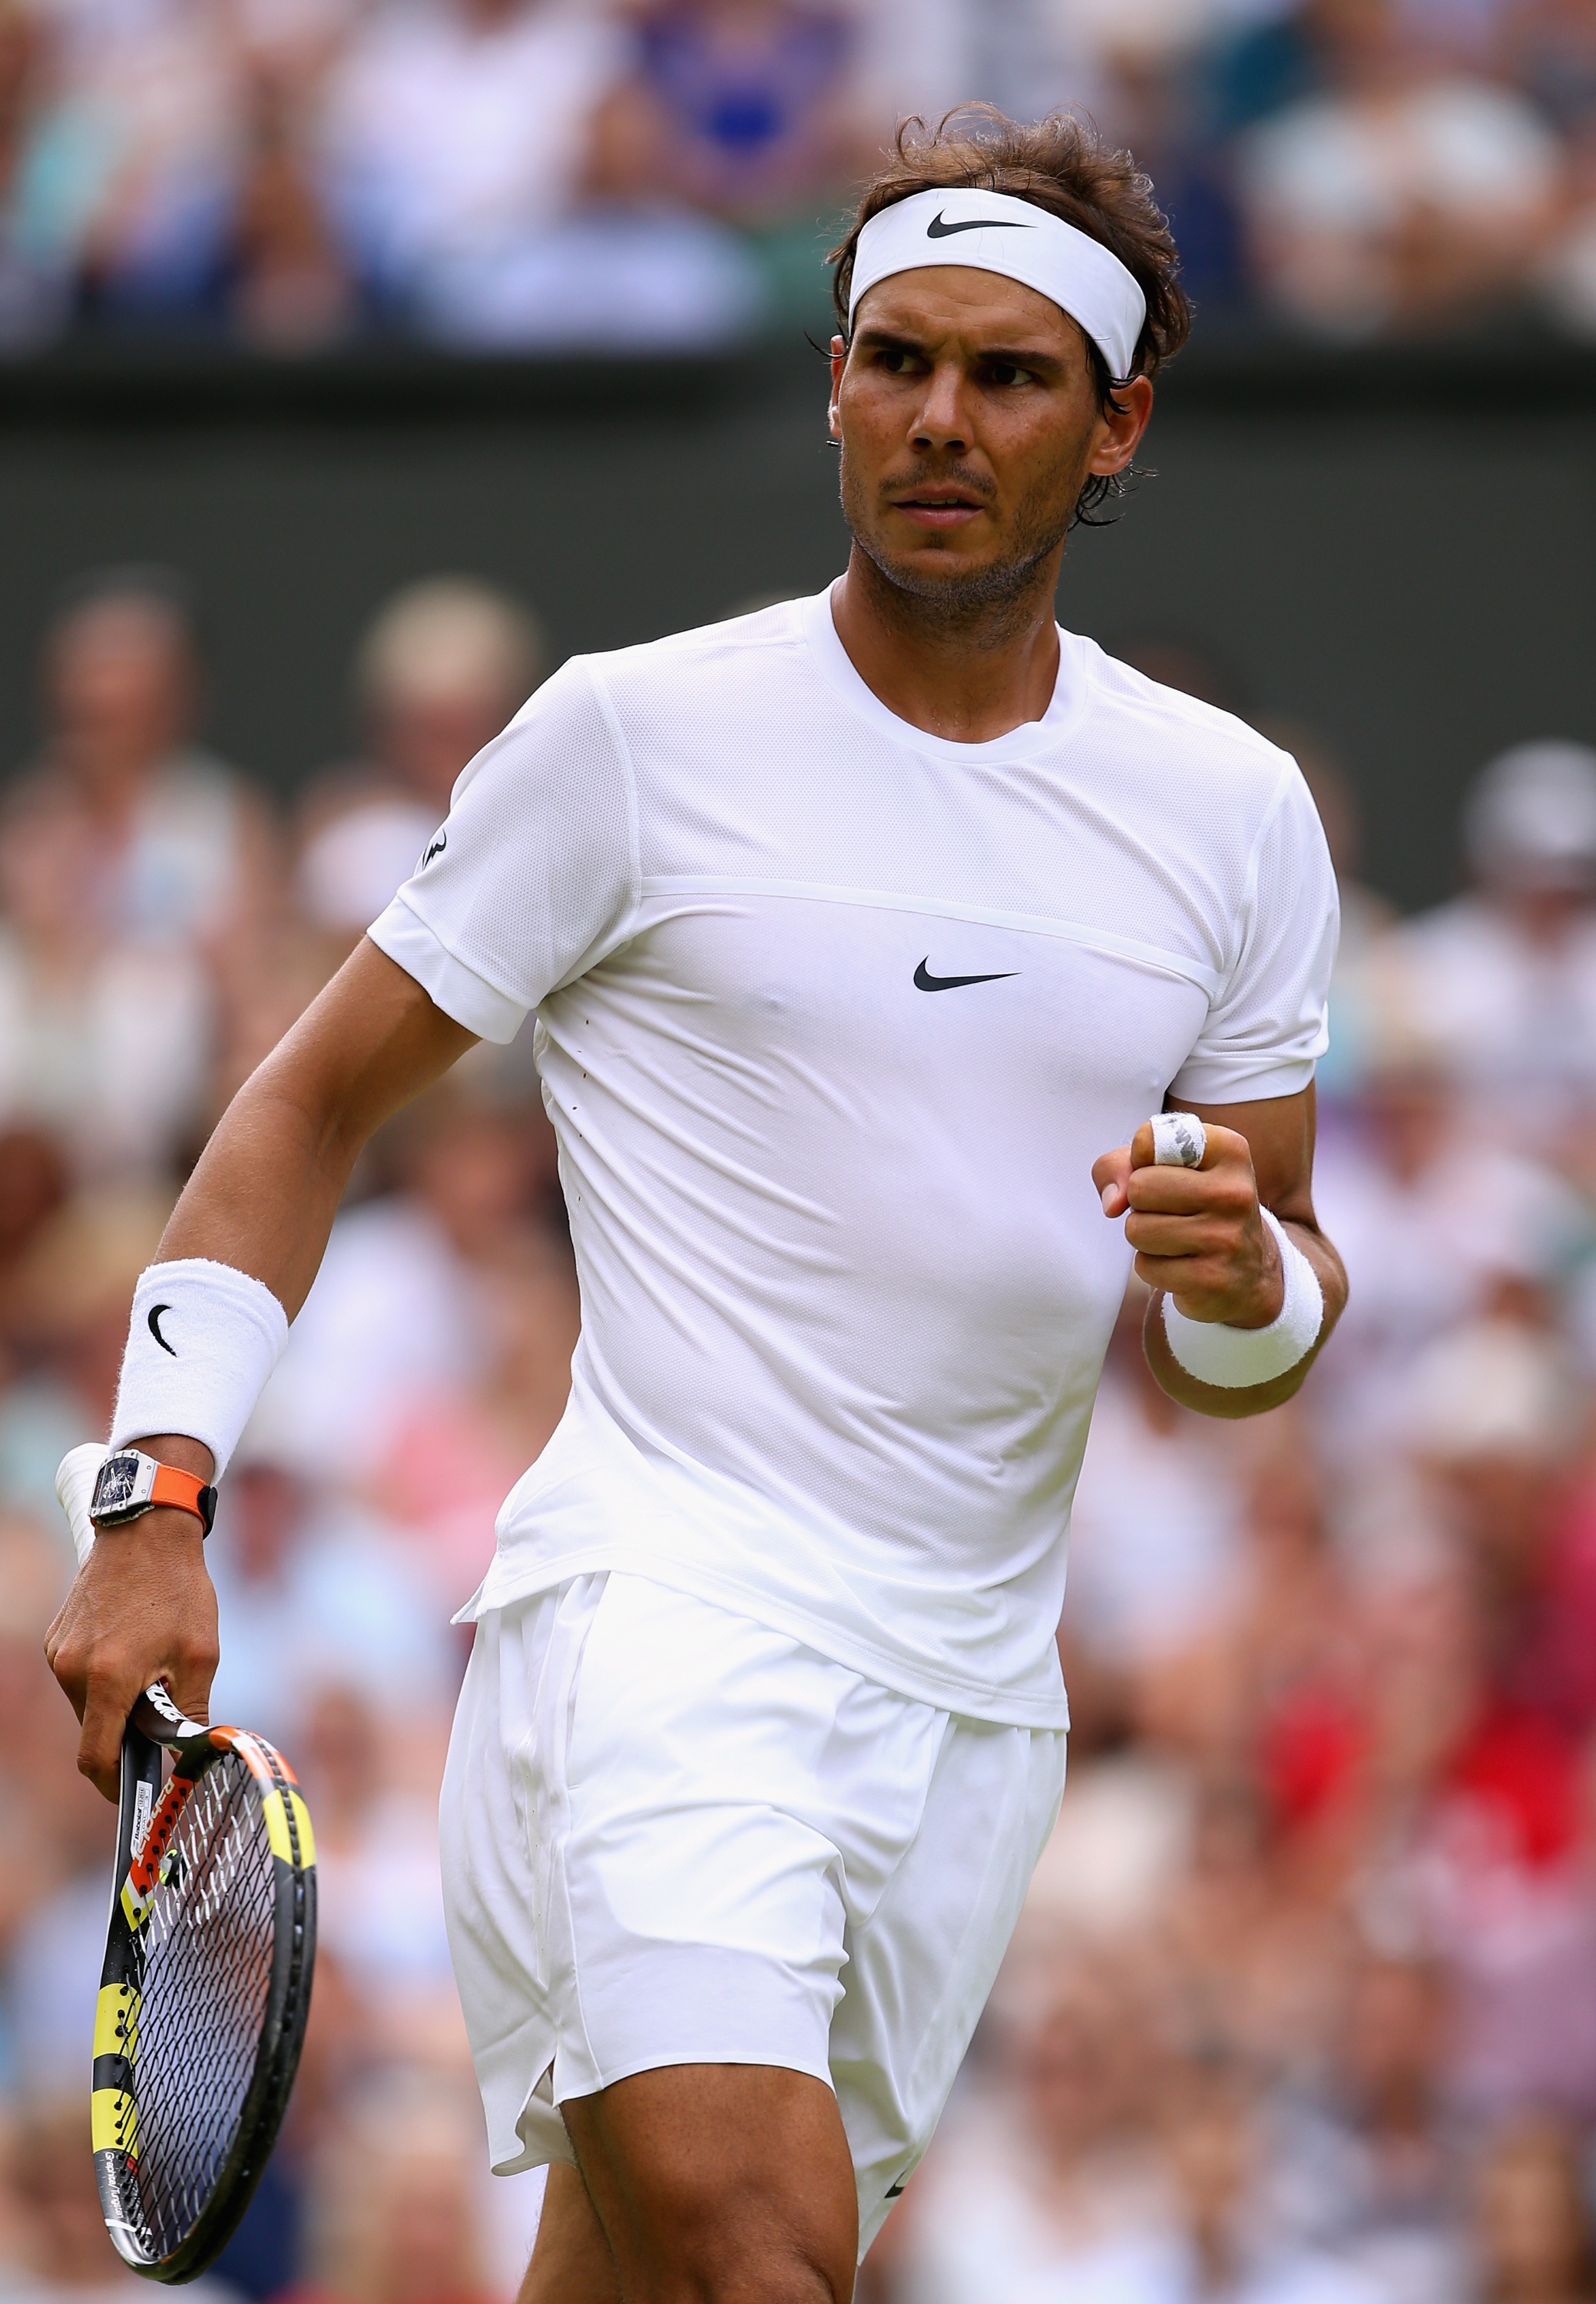 PHOTOS: Rafael Nadal loses in Wimbledon’s second round – Rafael Nadal Fans